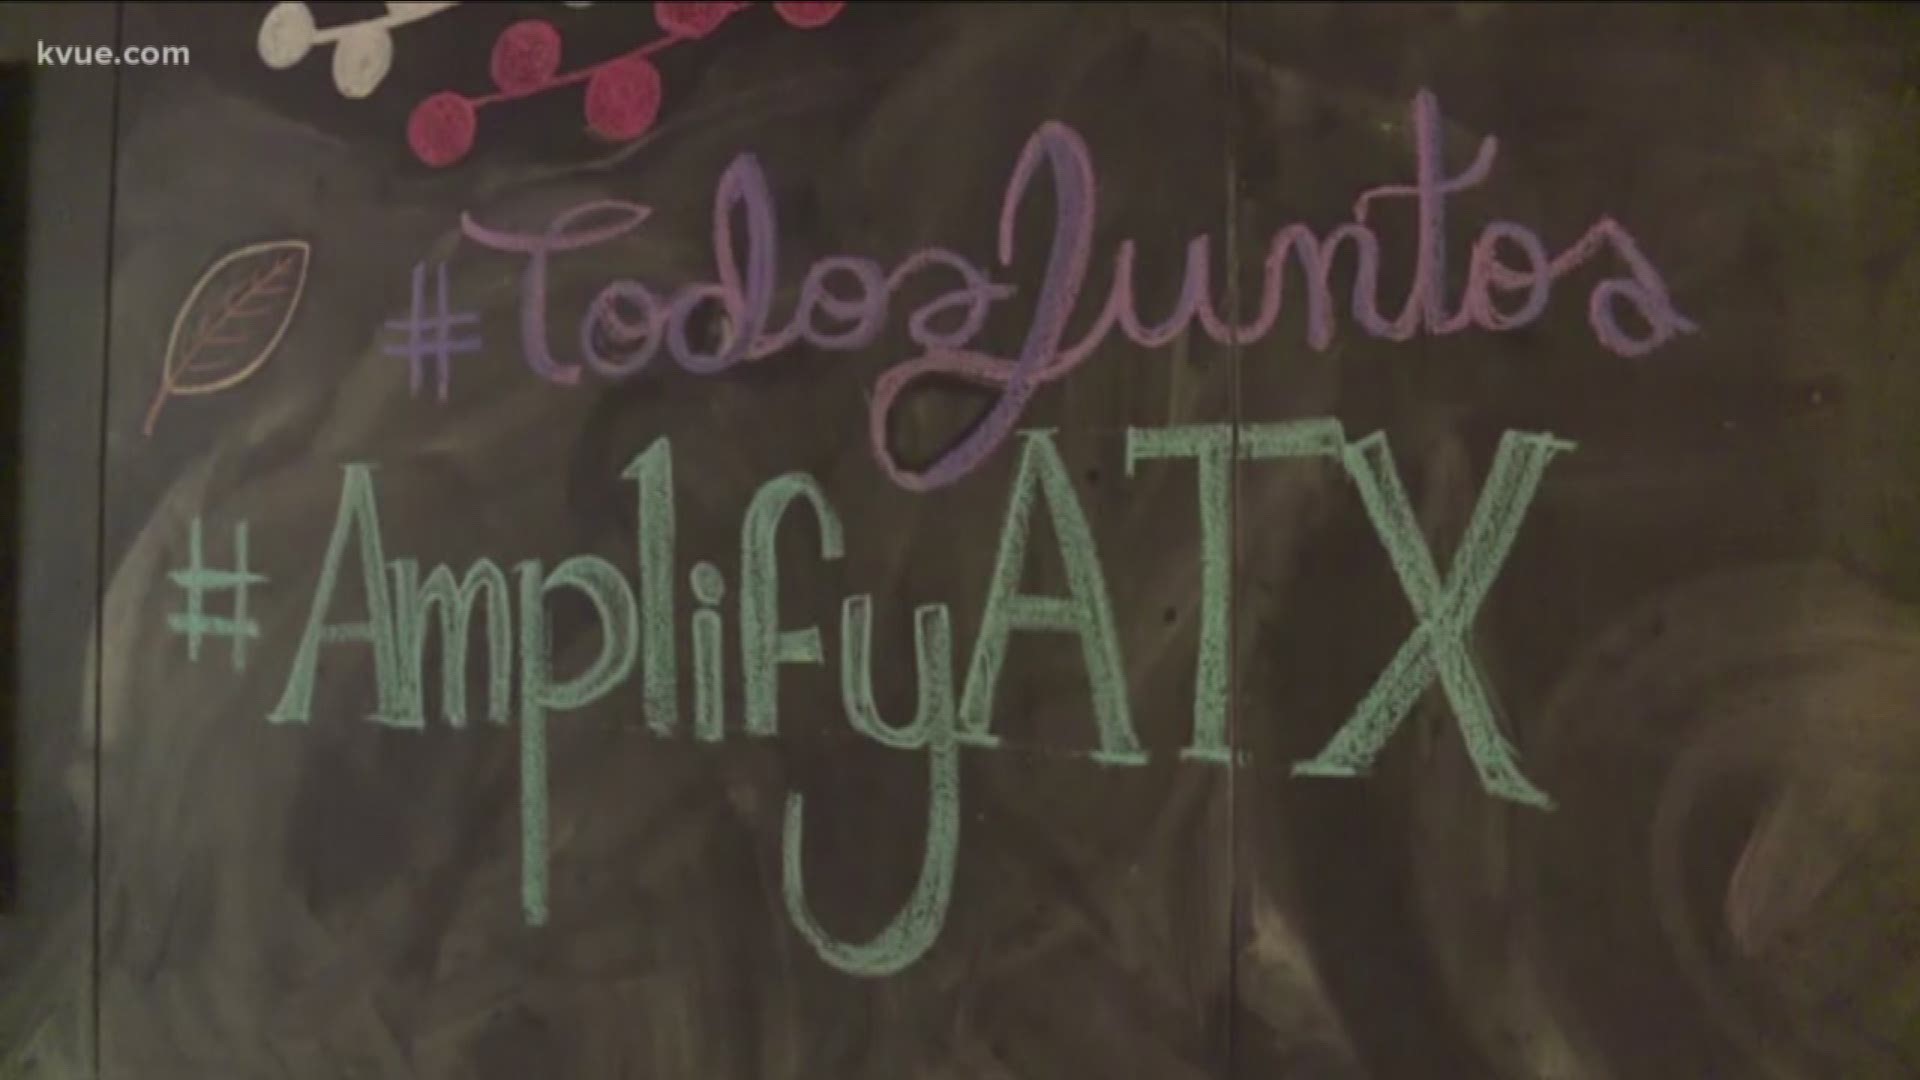 Amplify Austin wants to raise $11 million for more than 700 nonprofits.